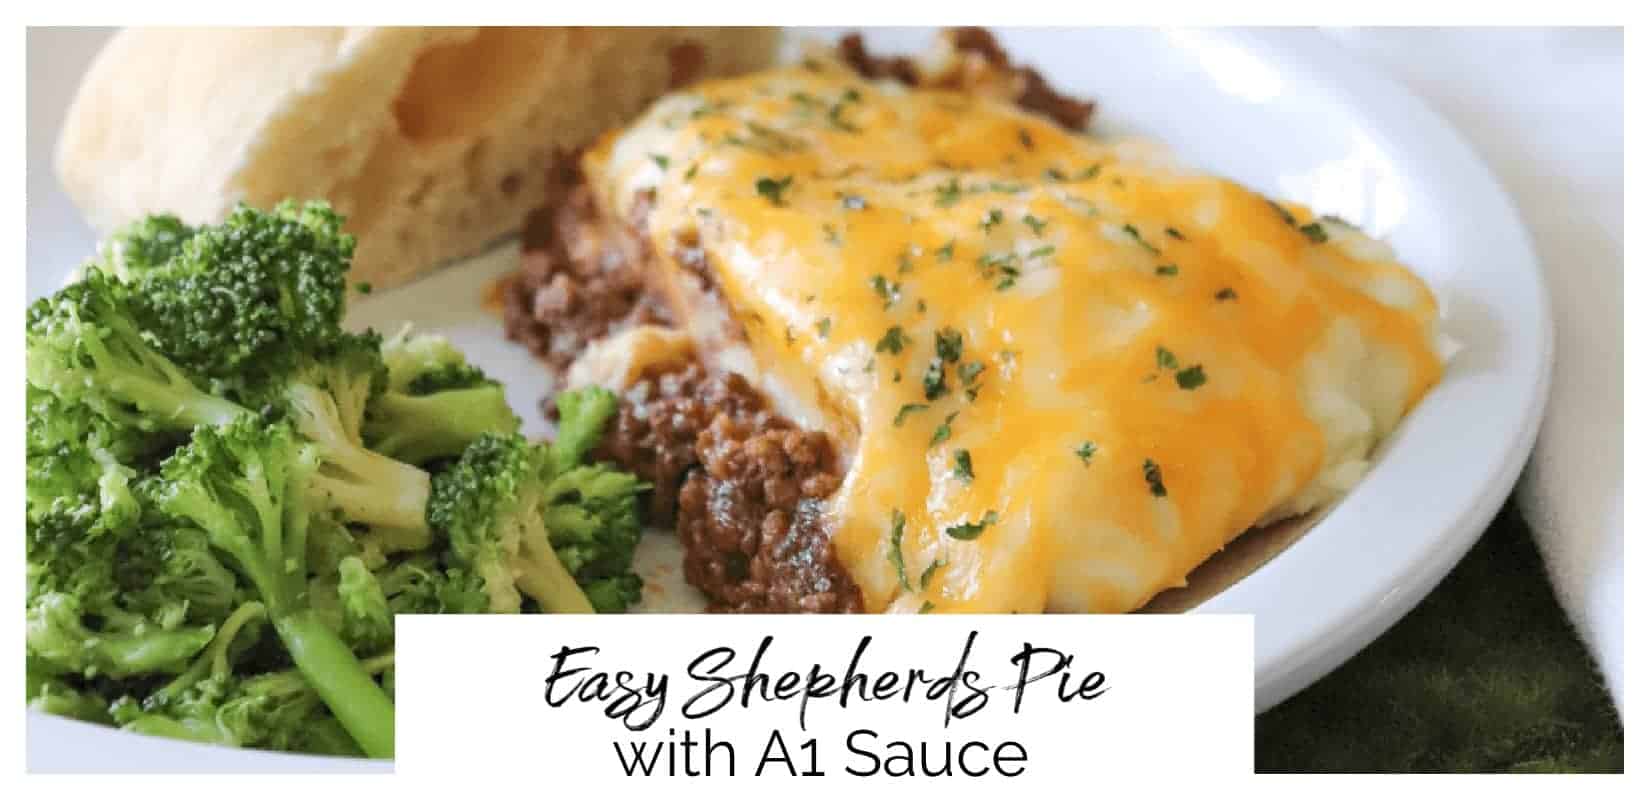 Easy Shepherd’s Pie with A1 Sauce